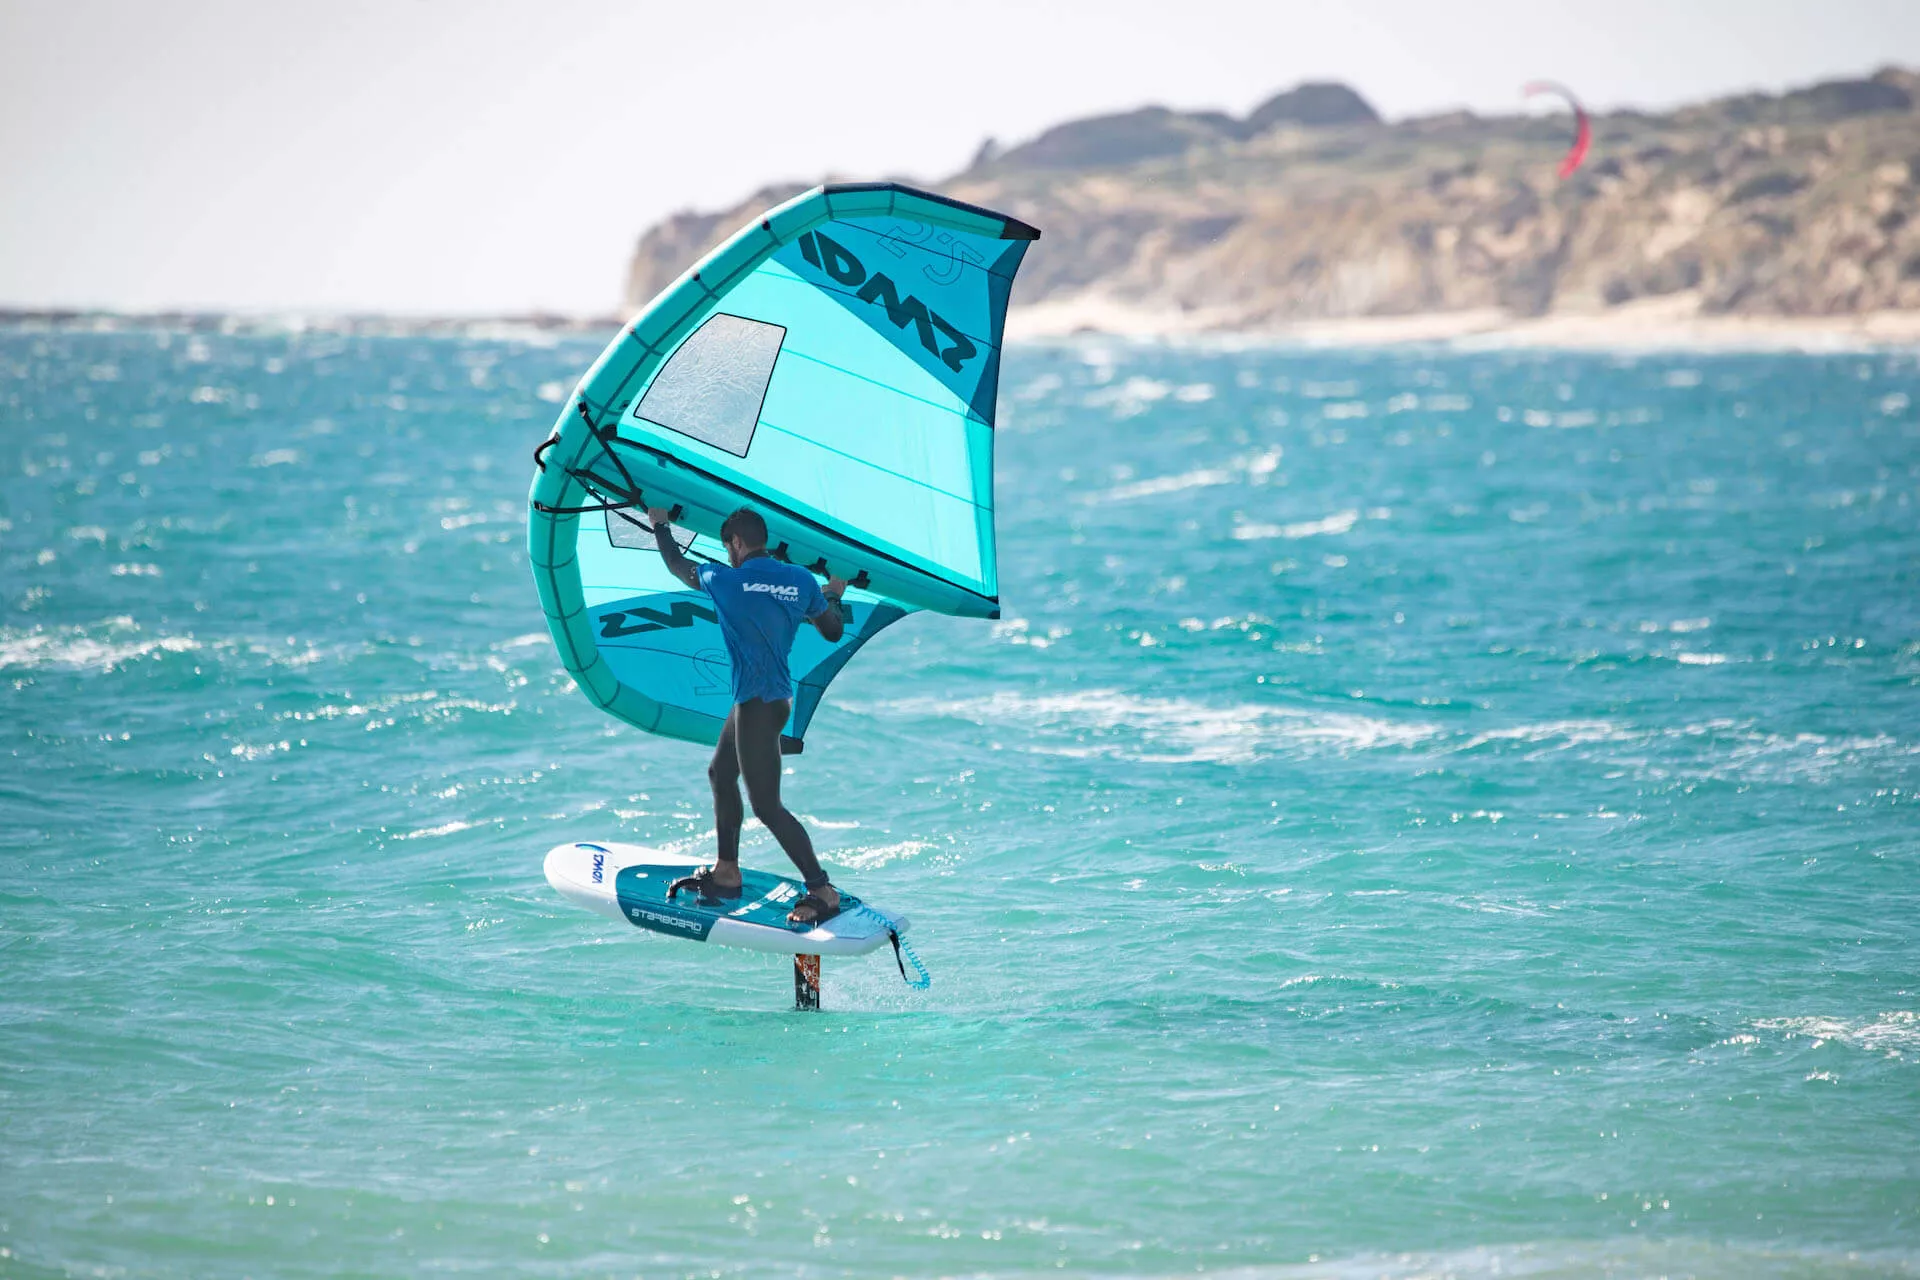 Laduna in Spain, Europe | Surfing,Kitesurfing,Windsurfing - Rated 1.7